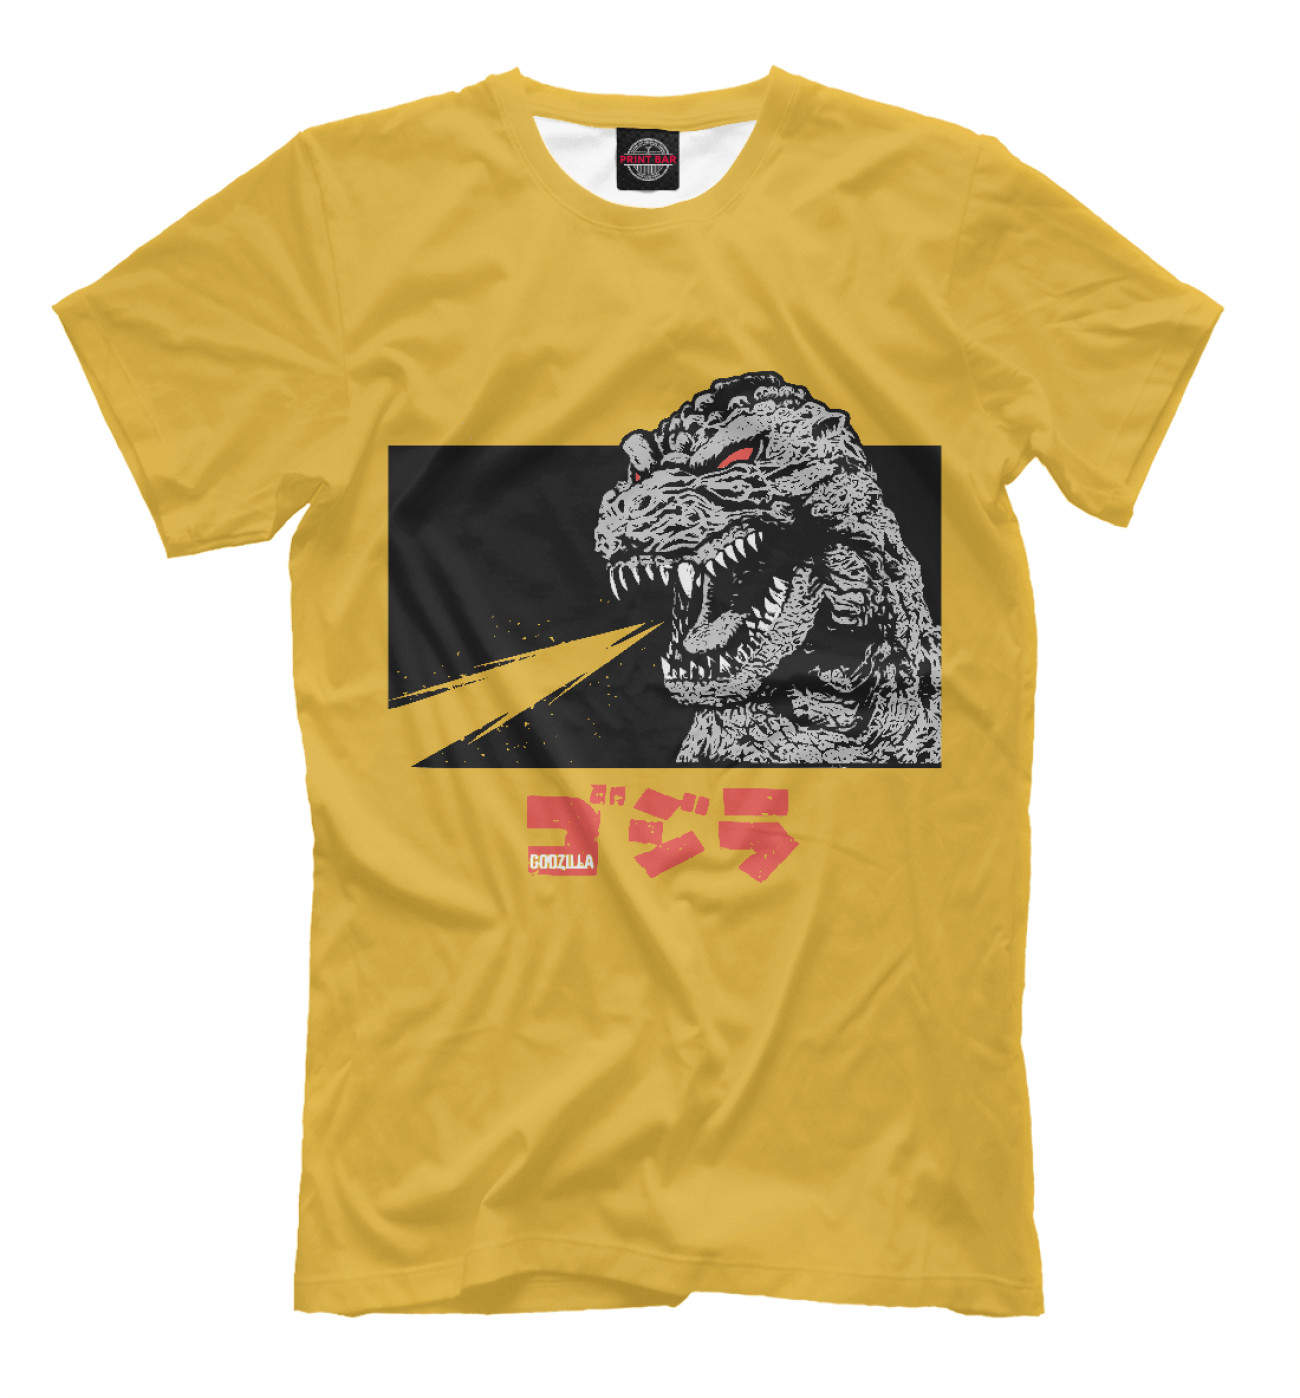 Мужская Футболка Godzilla, артикул: KNO-965643-fut-2